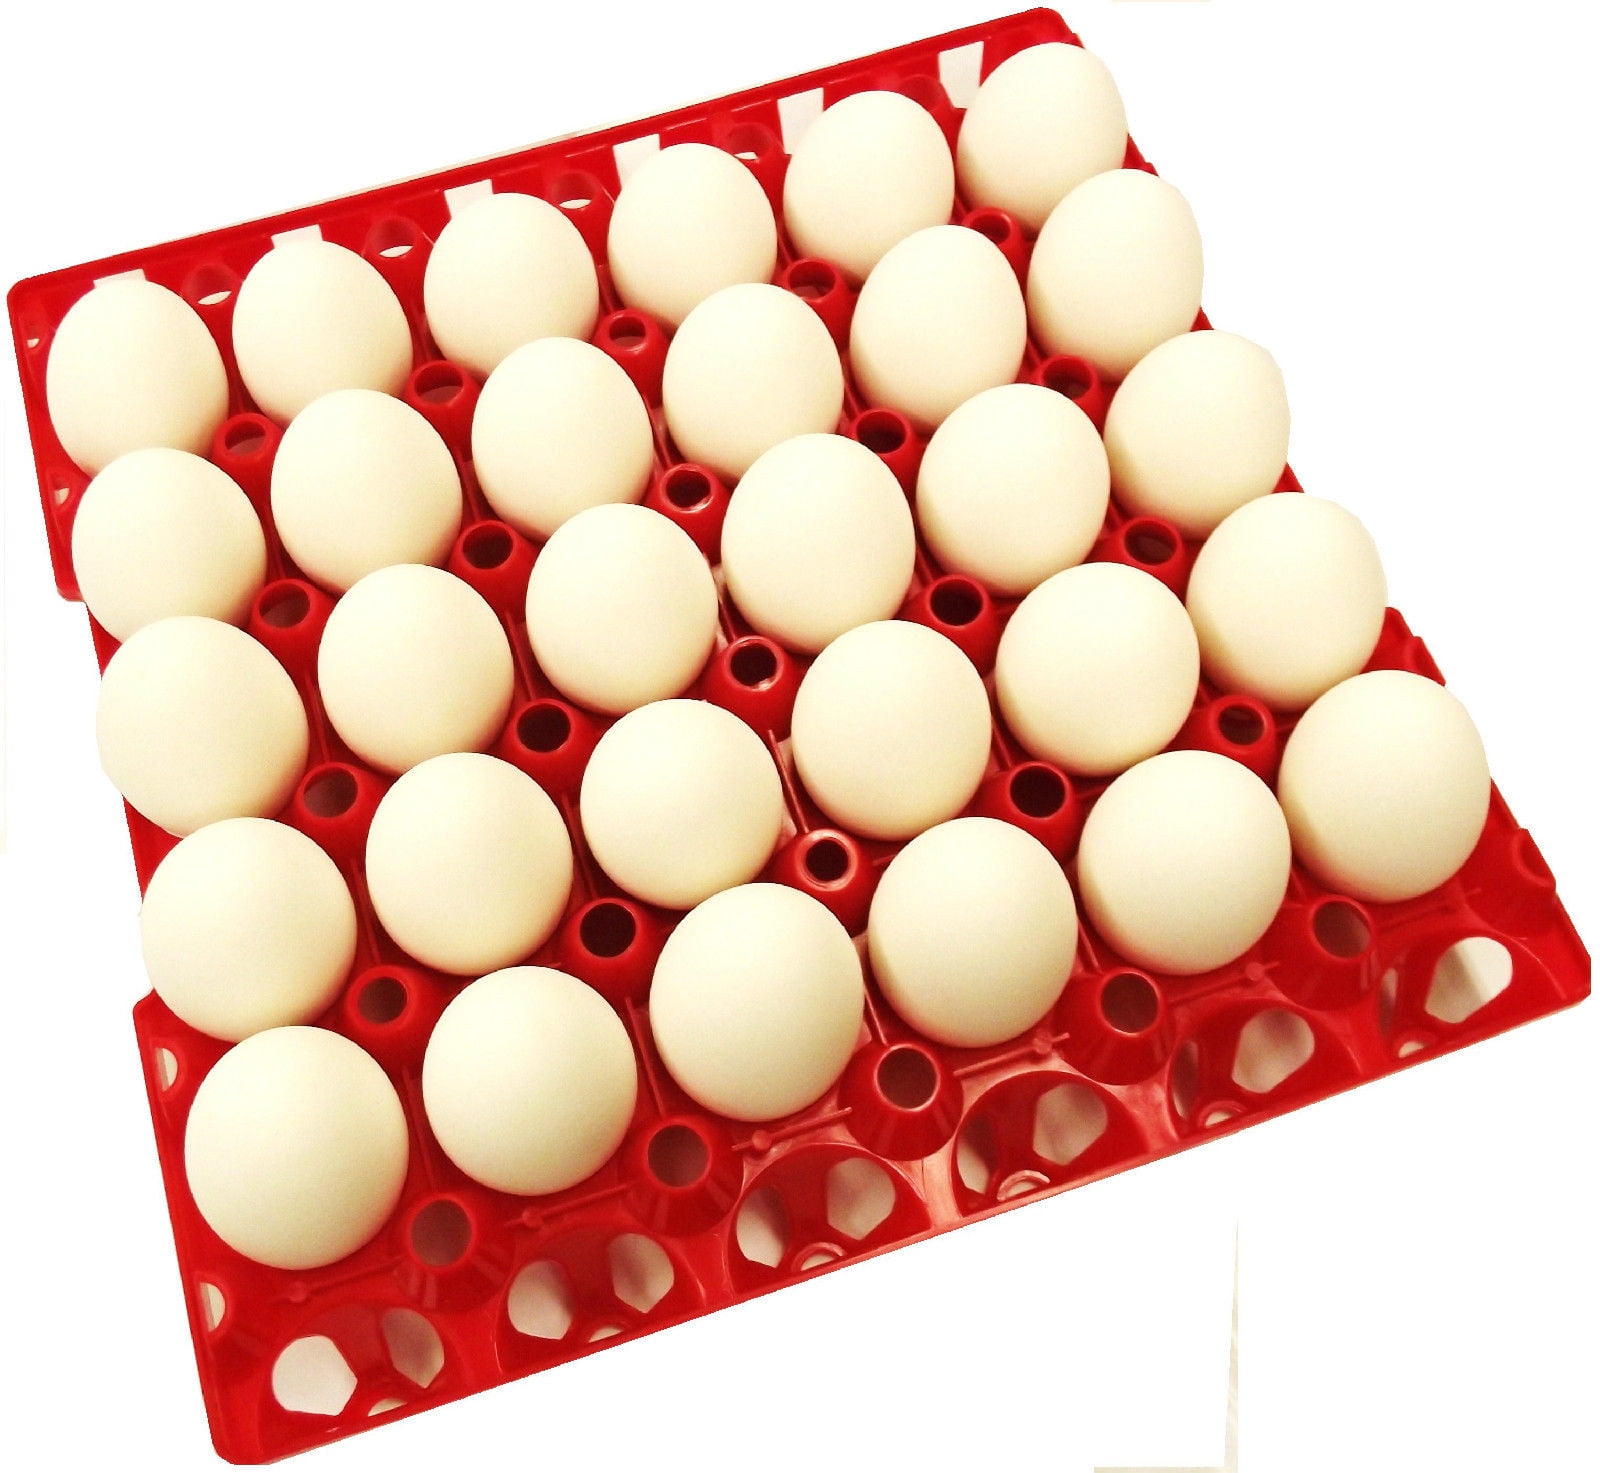 6 Packs Egg Trays for Incubator Storage Holds 30 Poultry Egg